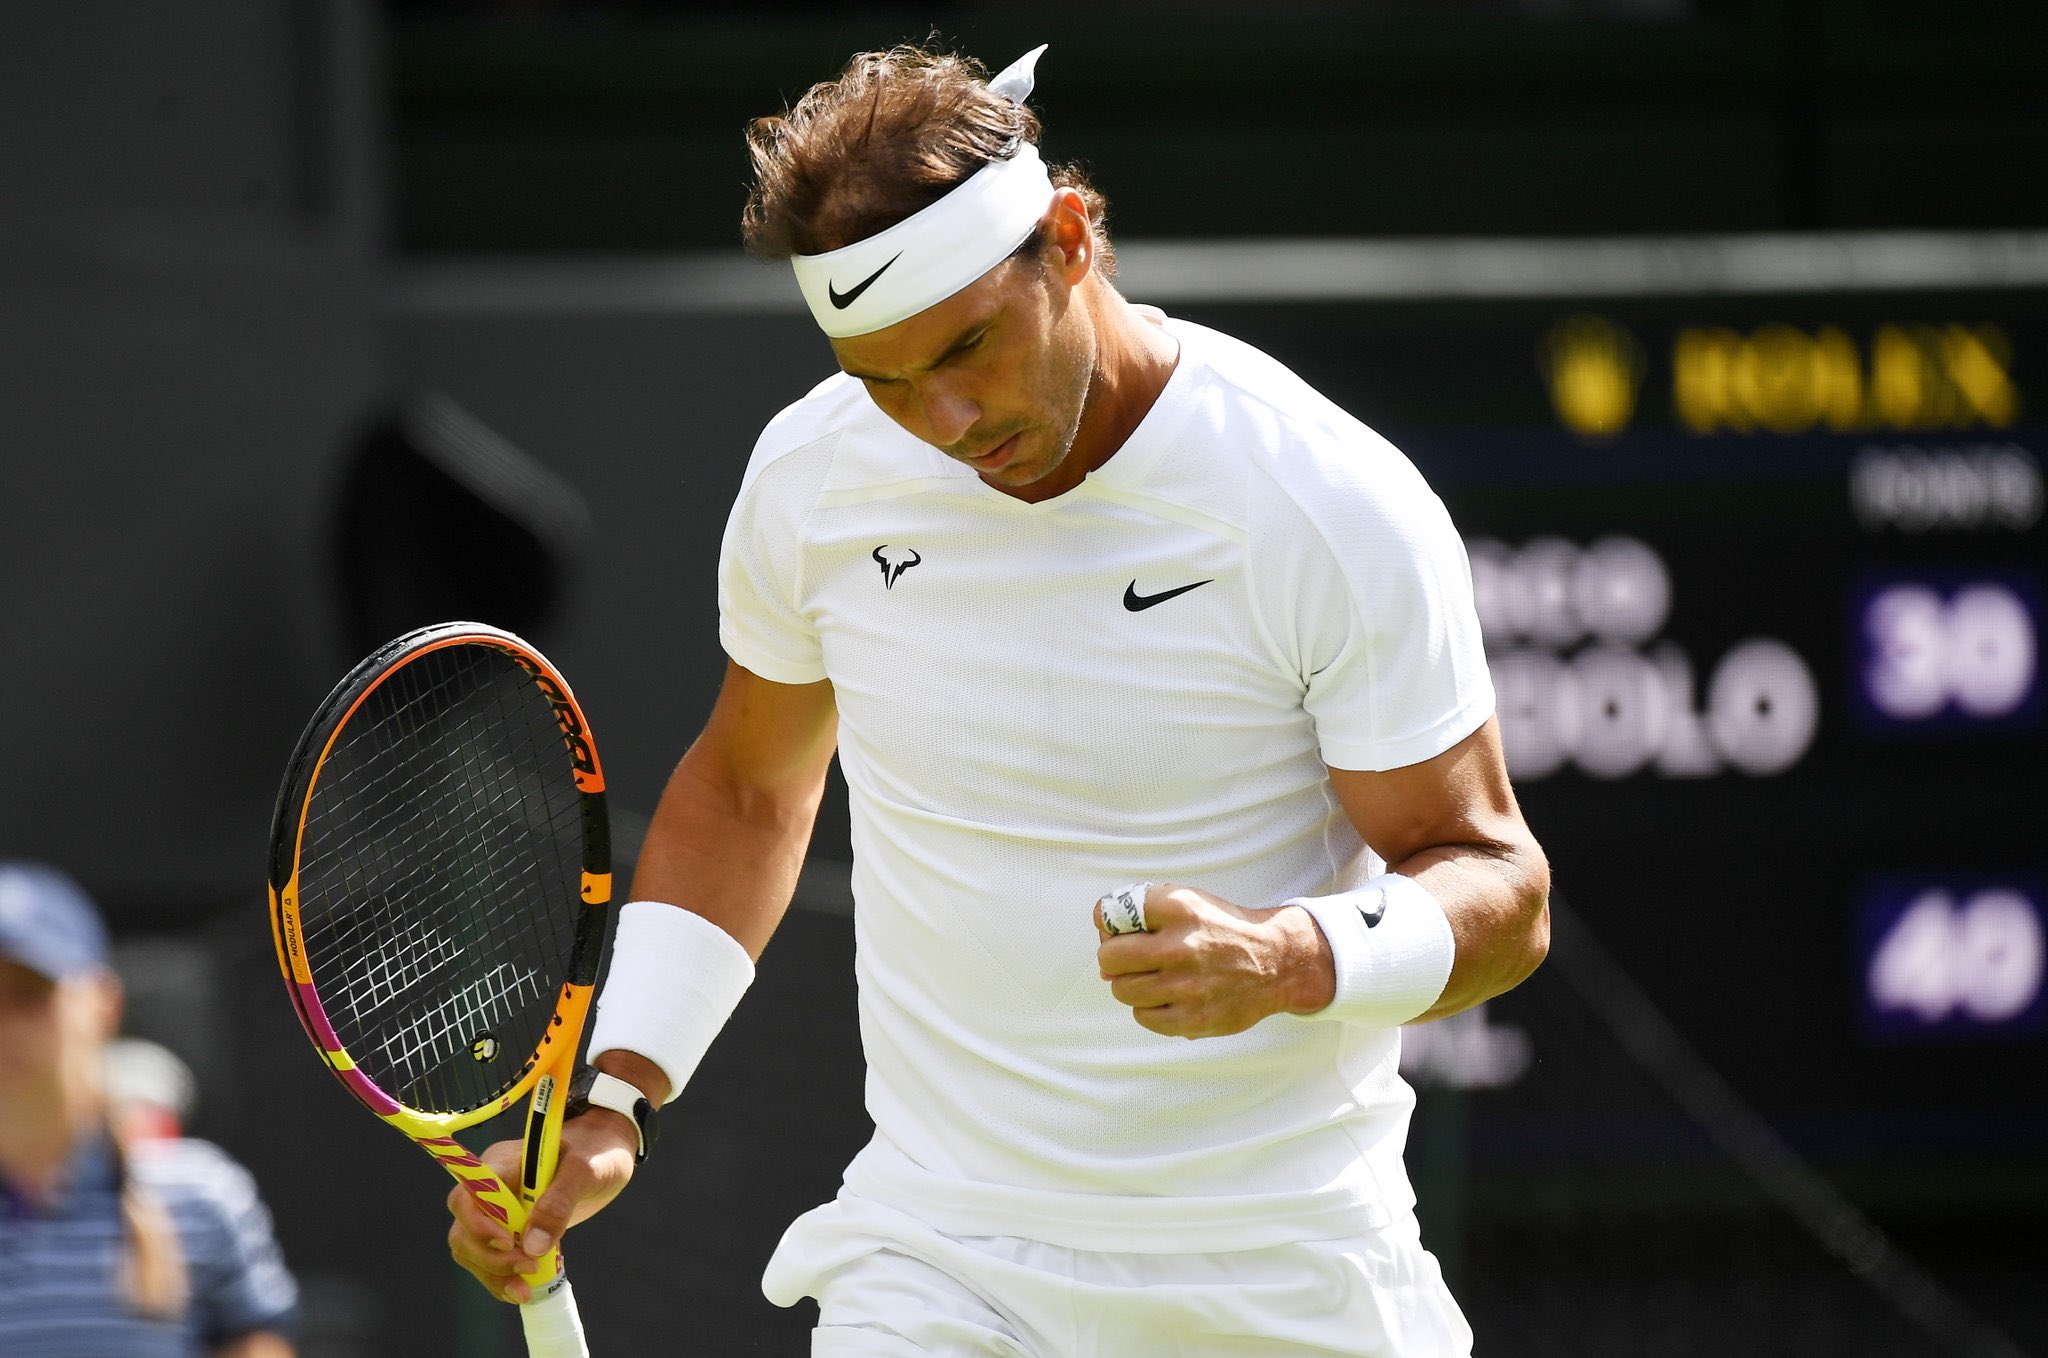 Rafael Nadal sofre para bater argentino na estreia em Wimbledon